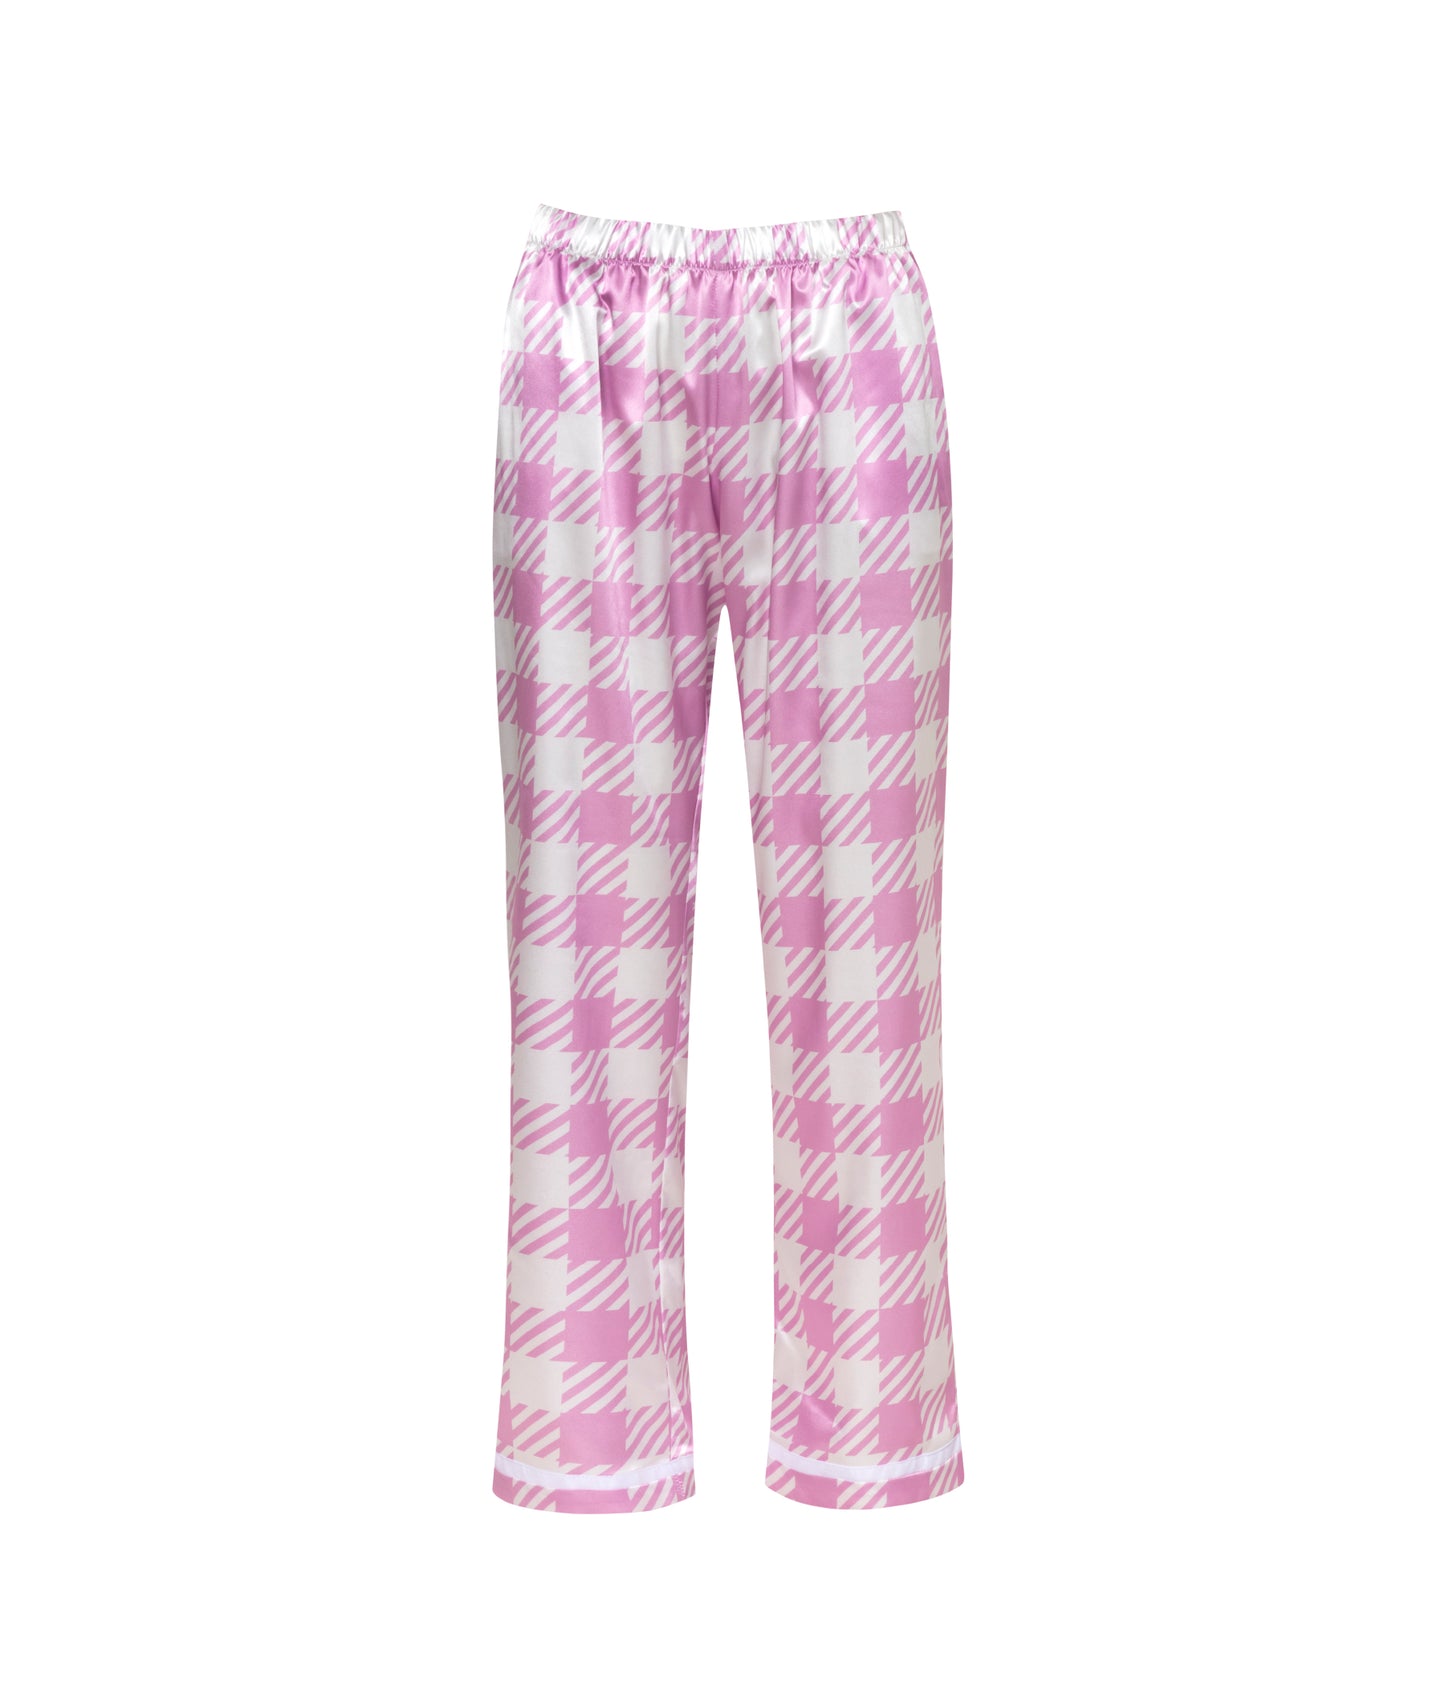 Verdelimon - Pants - Maui - Printed - Pink Squares - Front